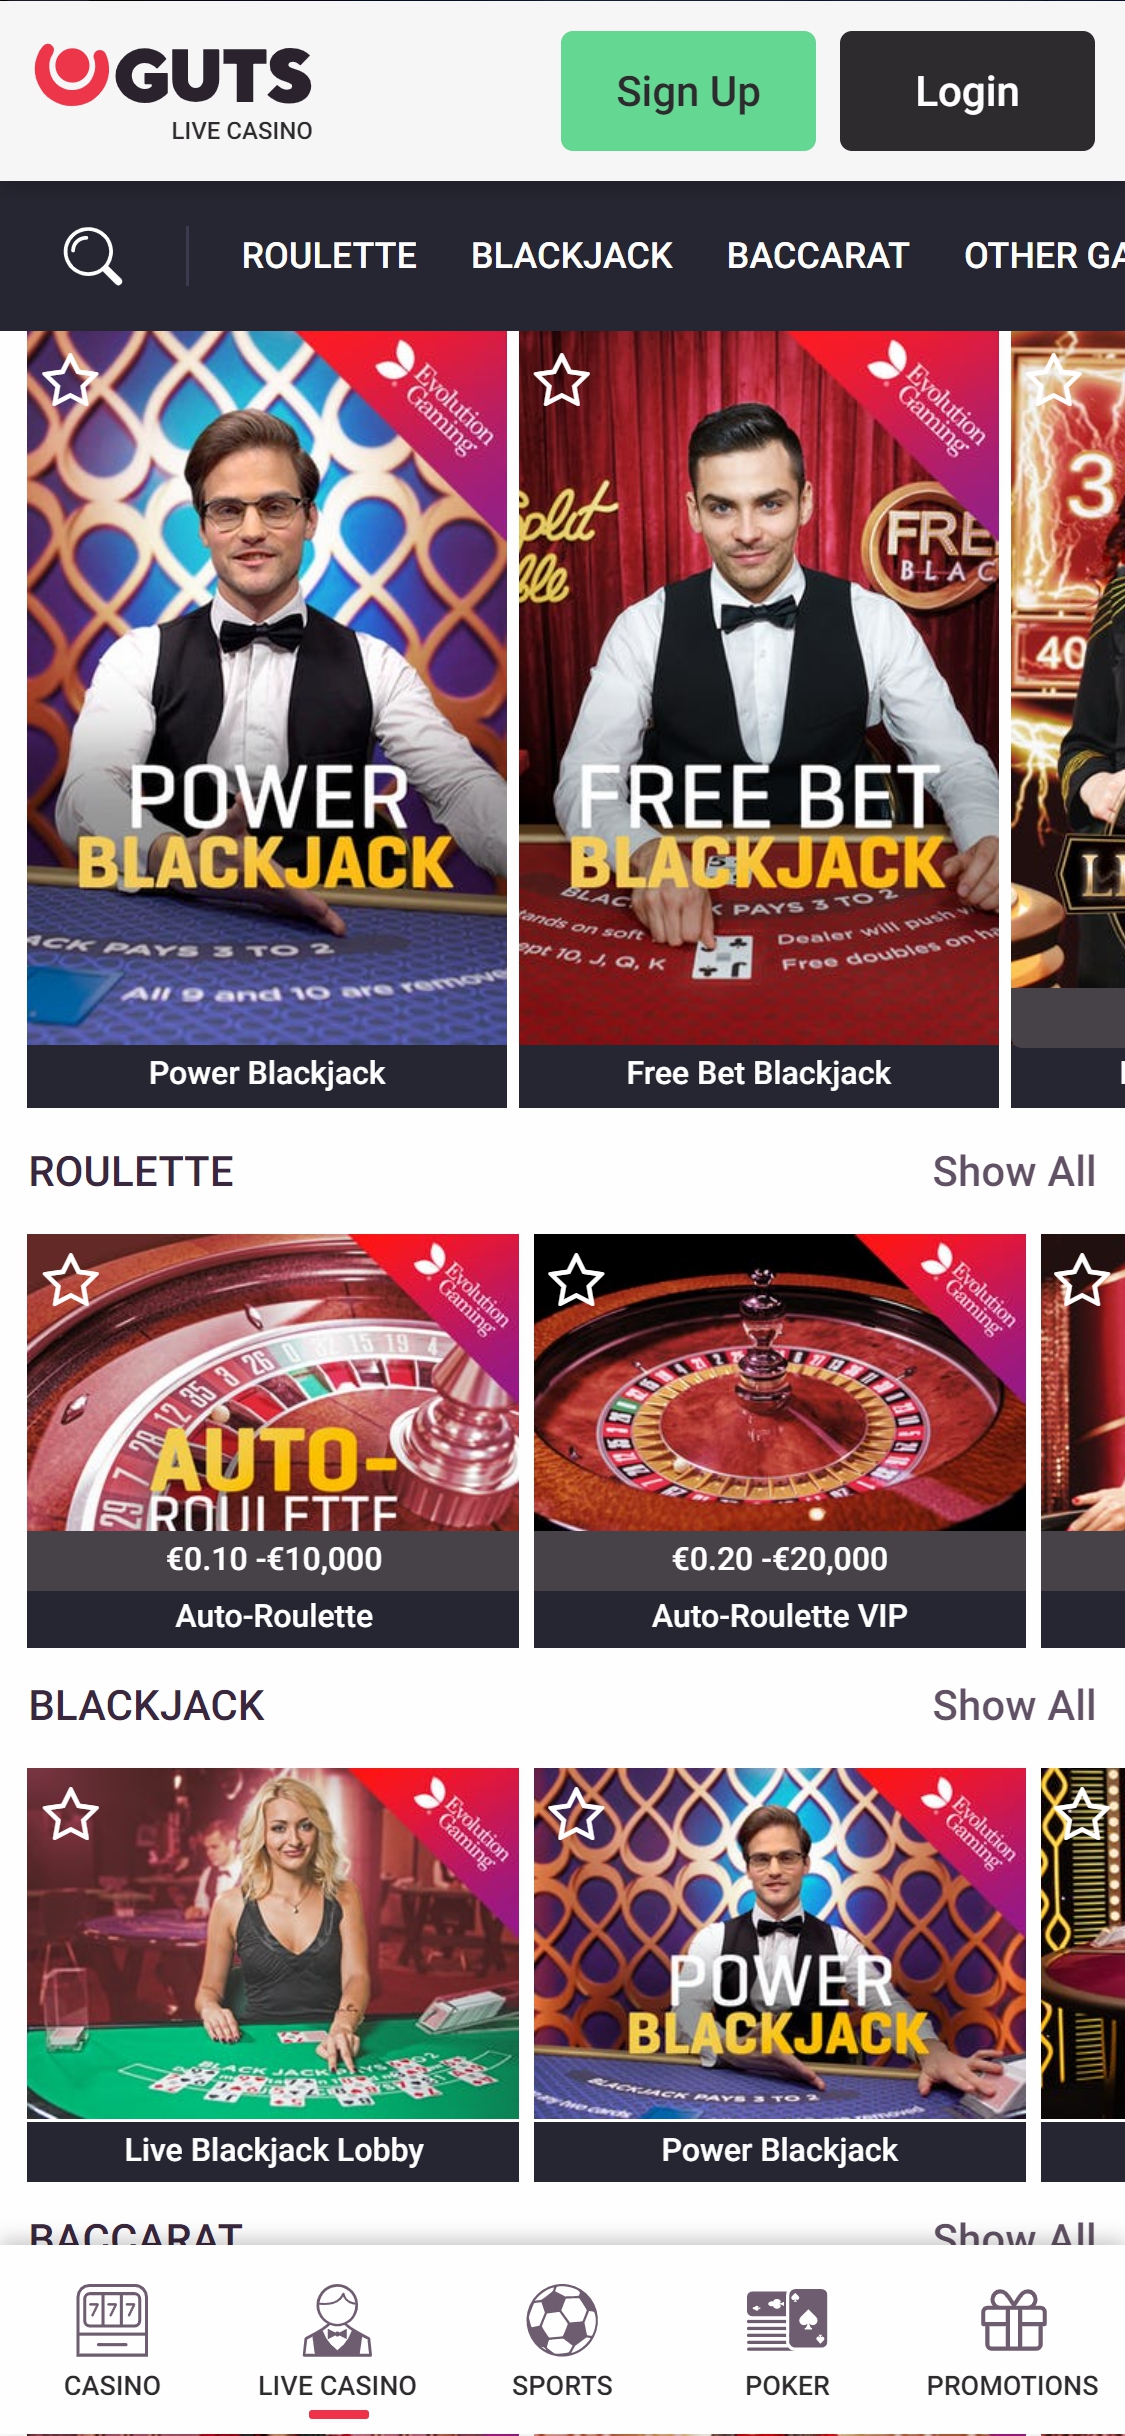 Guts Casino Mobile Live Dealer Games Review